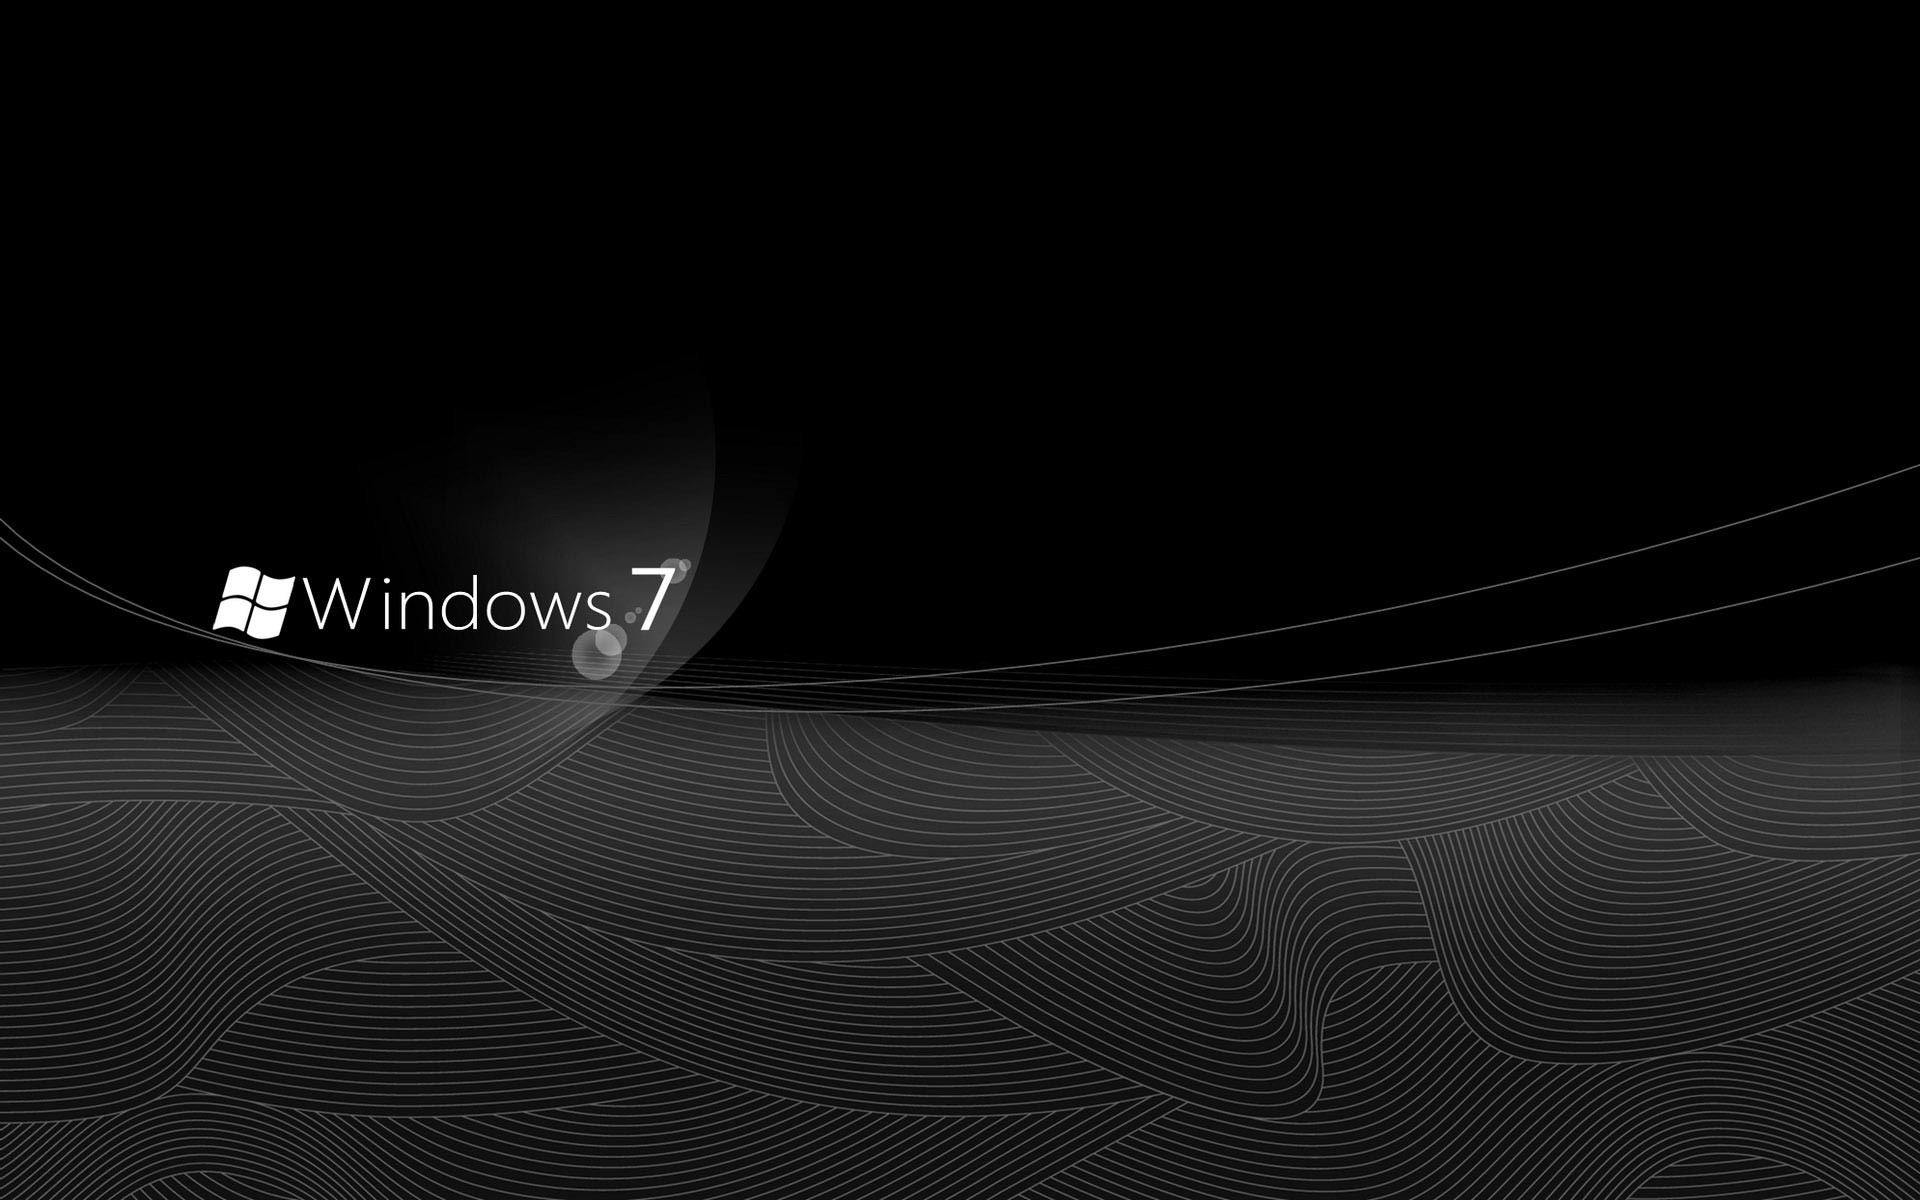 1920x1200 Windows 7 elegant black desktop wallpaper high quality wallpapers